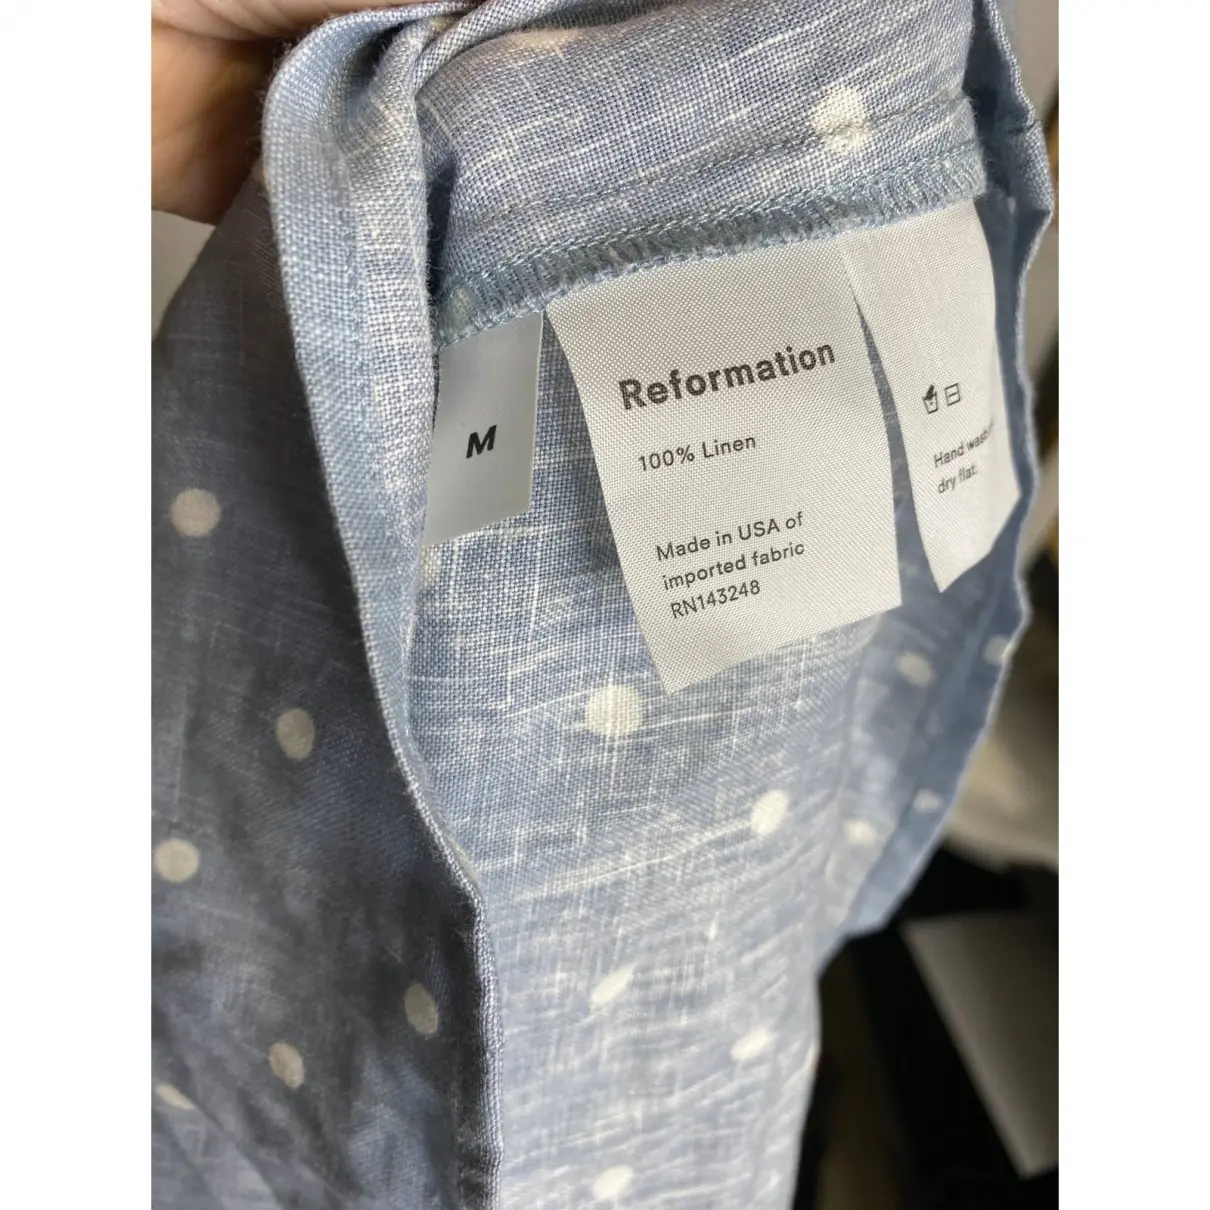 Buy Reformation Linen camisole online